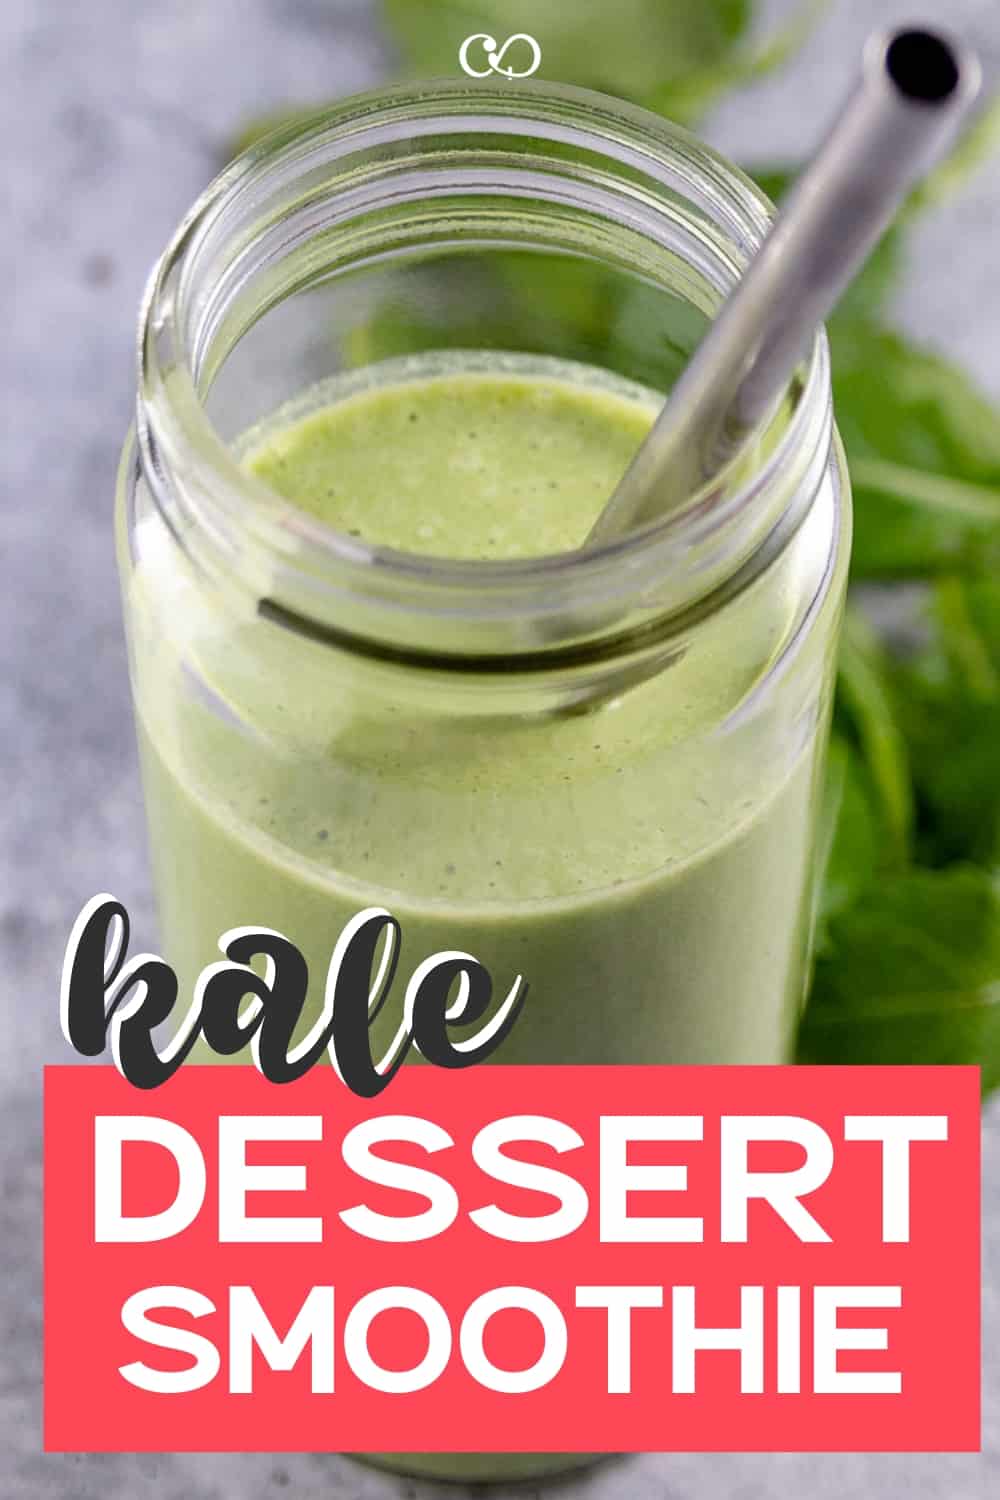 Creamy Kale Banana Smoothie - You're going to love this kale and banana smoothie. It tastes like dessert! #kalesmoothie #dessertsmoothie #greensmoothie #glutenfree #easysmoothie #healthyrecipe | cheerfulcook.com via @cheerfulcook